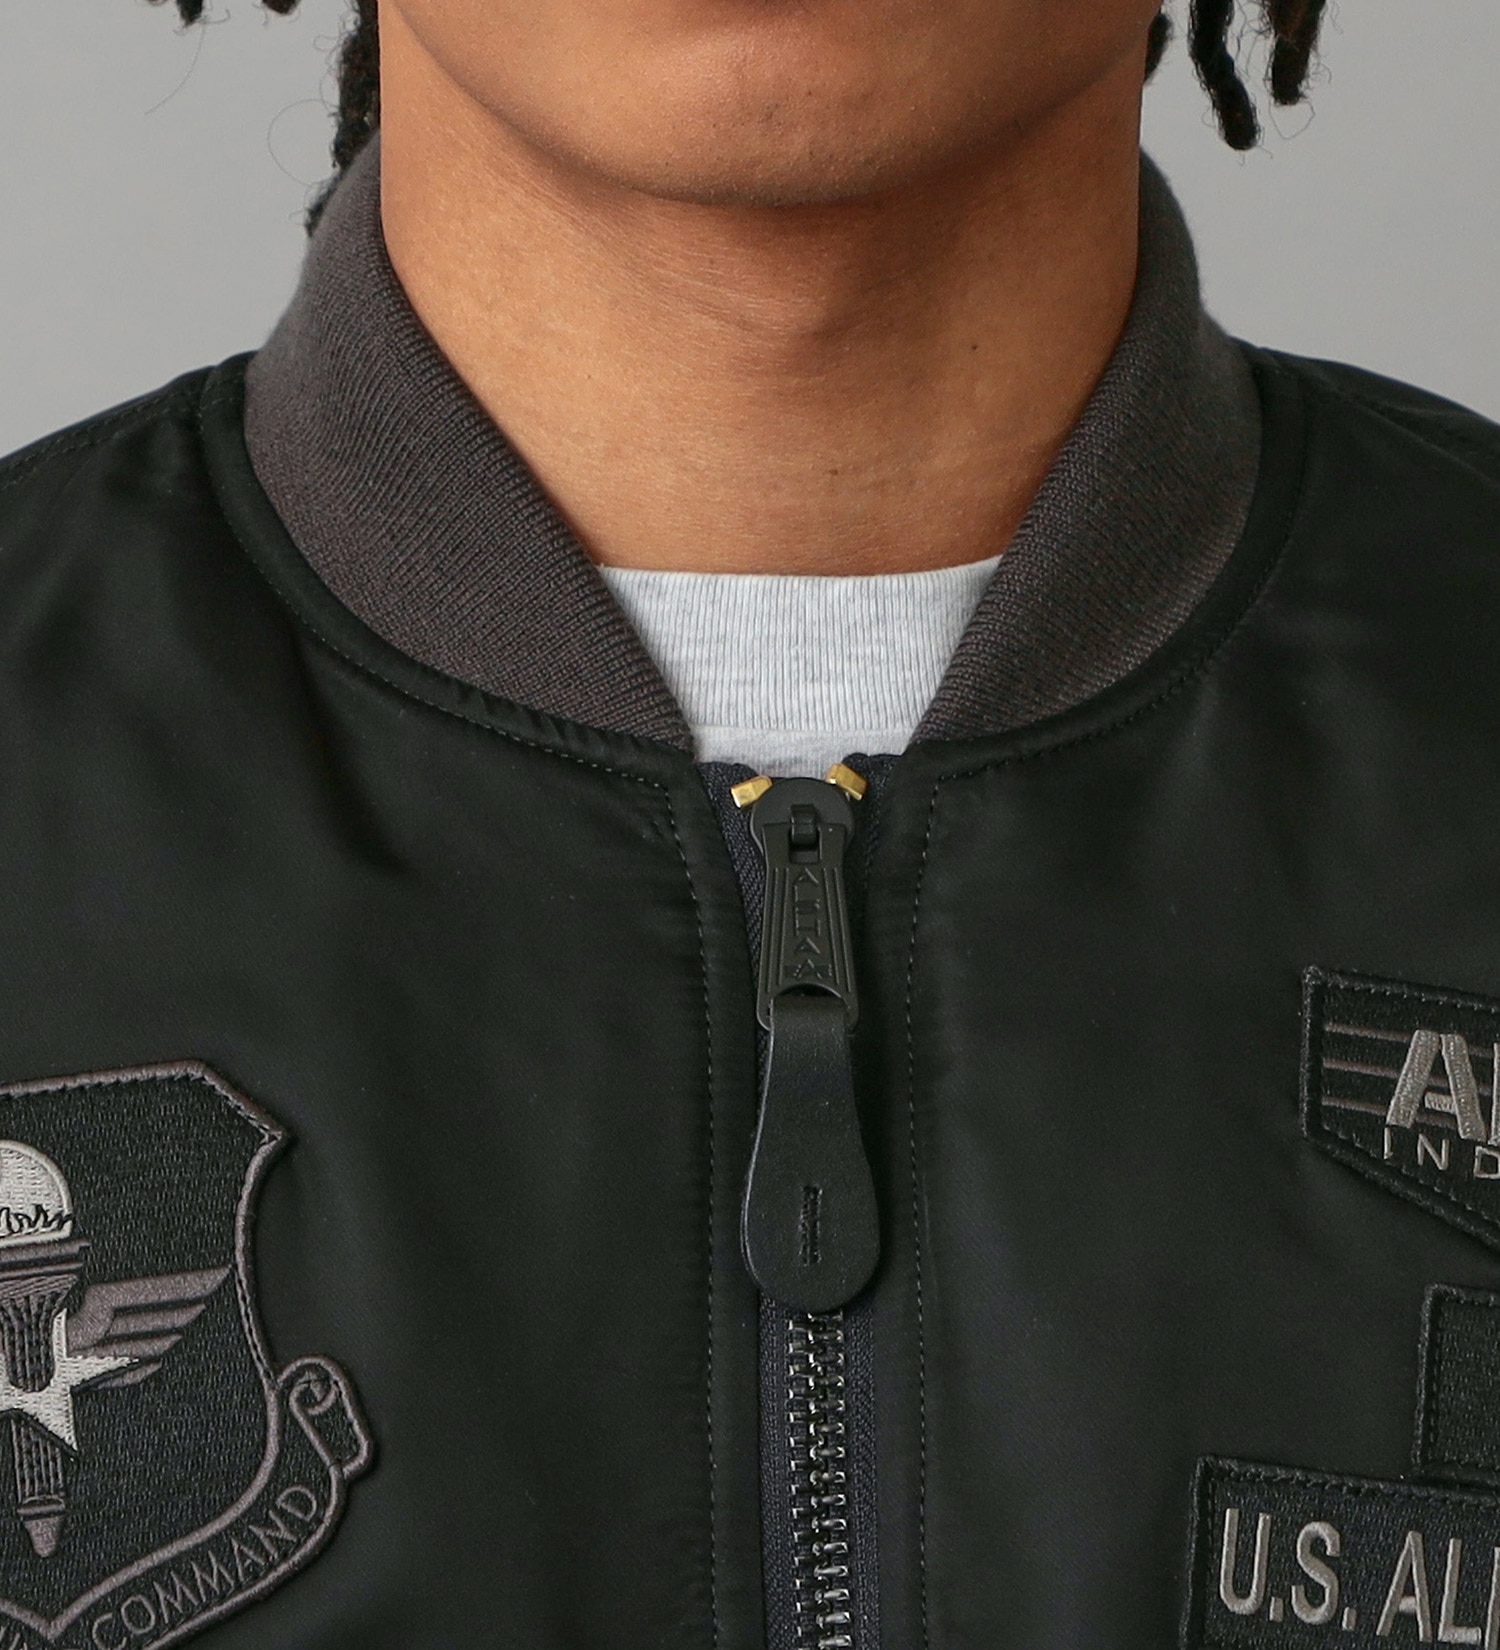 U.S AIR FORCE(ユーエスエアフォース) メンズ アウター ジャケット